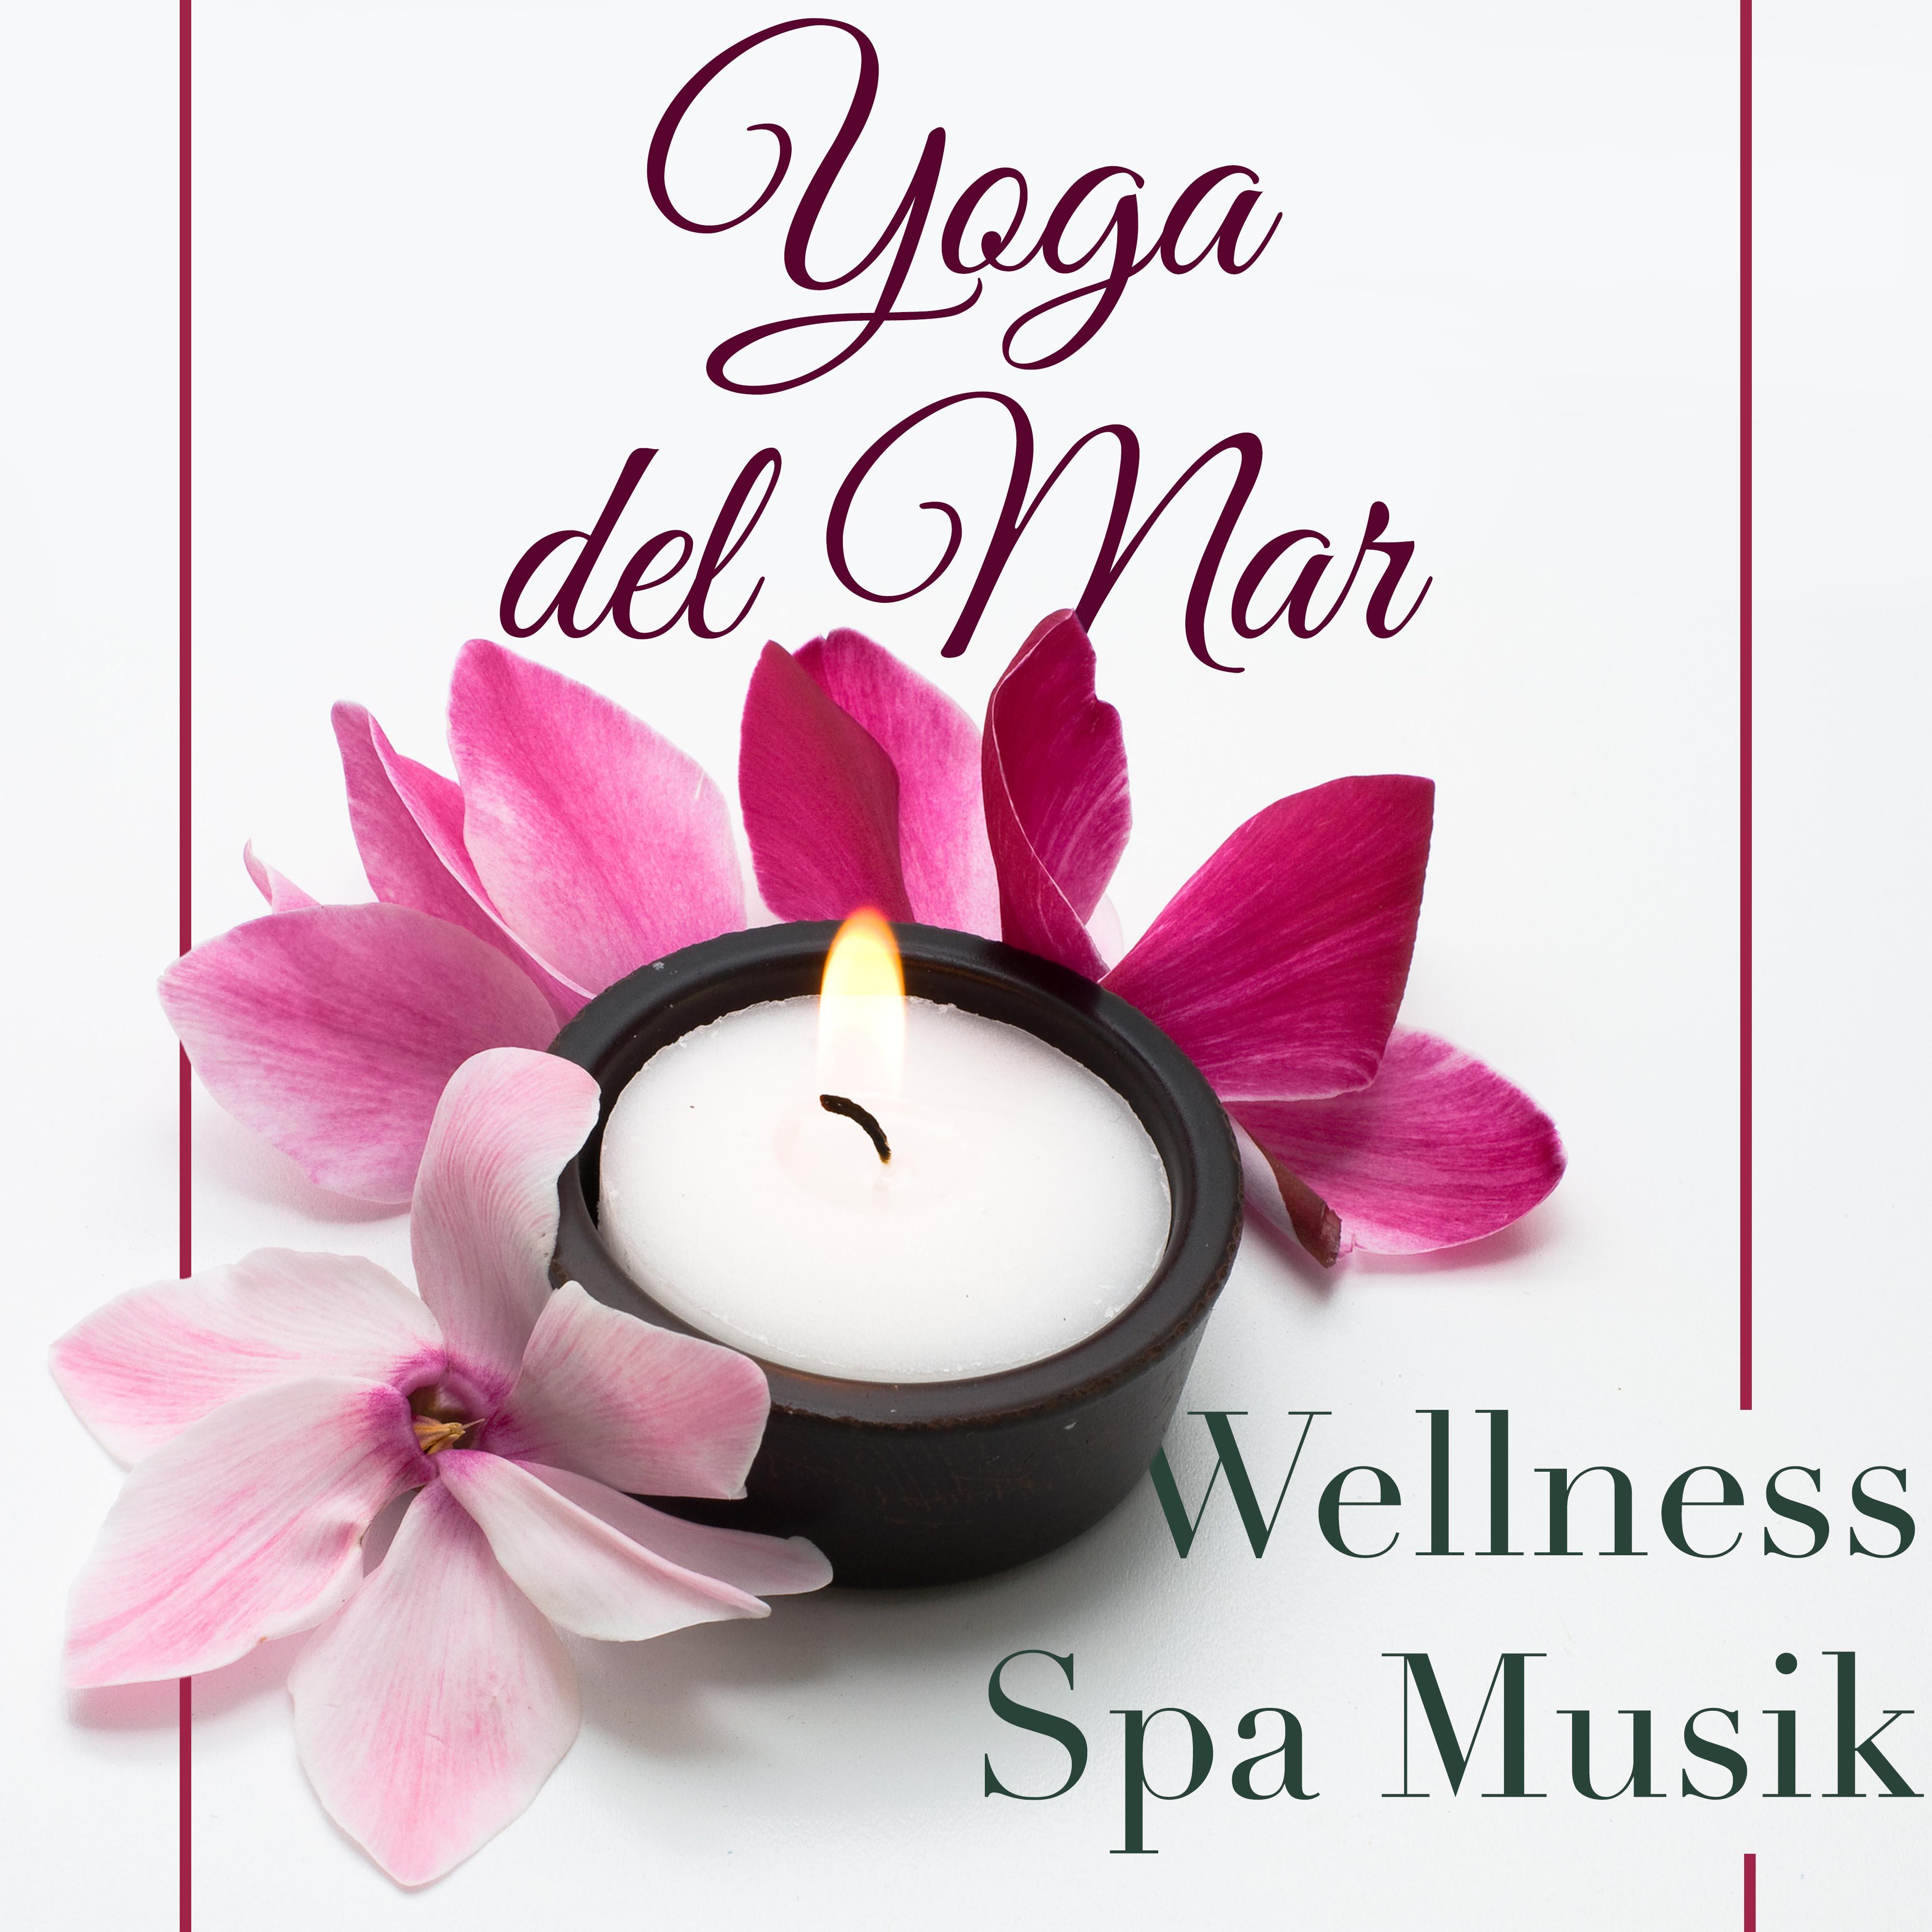 Yoga del Mar: Wellness Spa Musik Cafe & Naturgeräusche Entspannungsmusik Klangkulissen, Yoga Musik & Tiefenentspannung Atmospheres